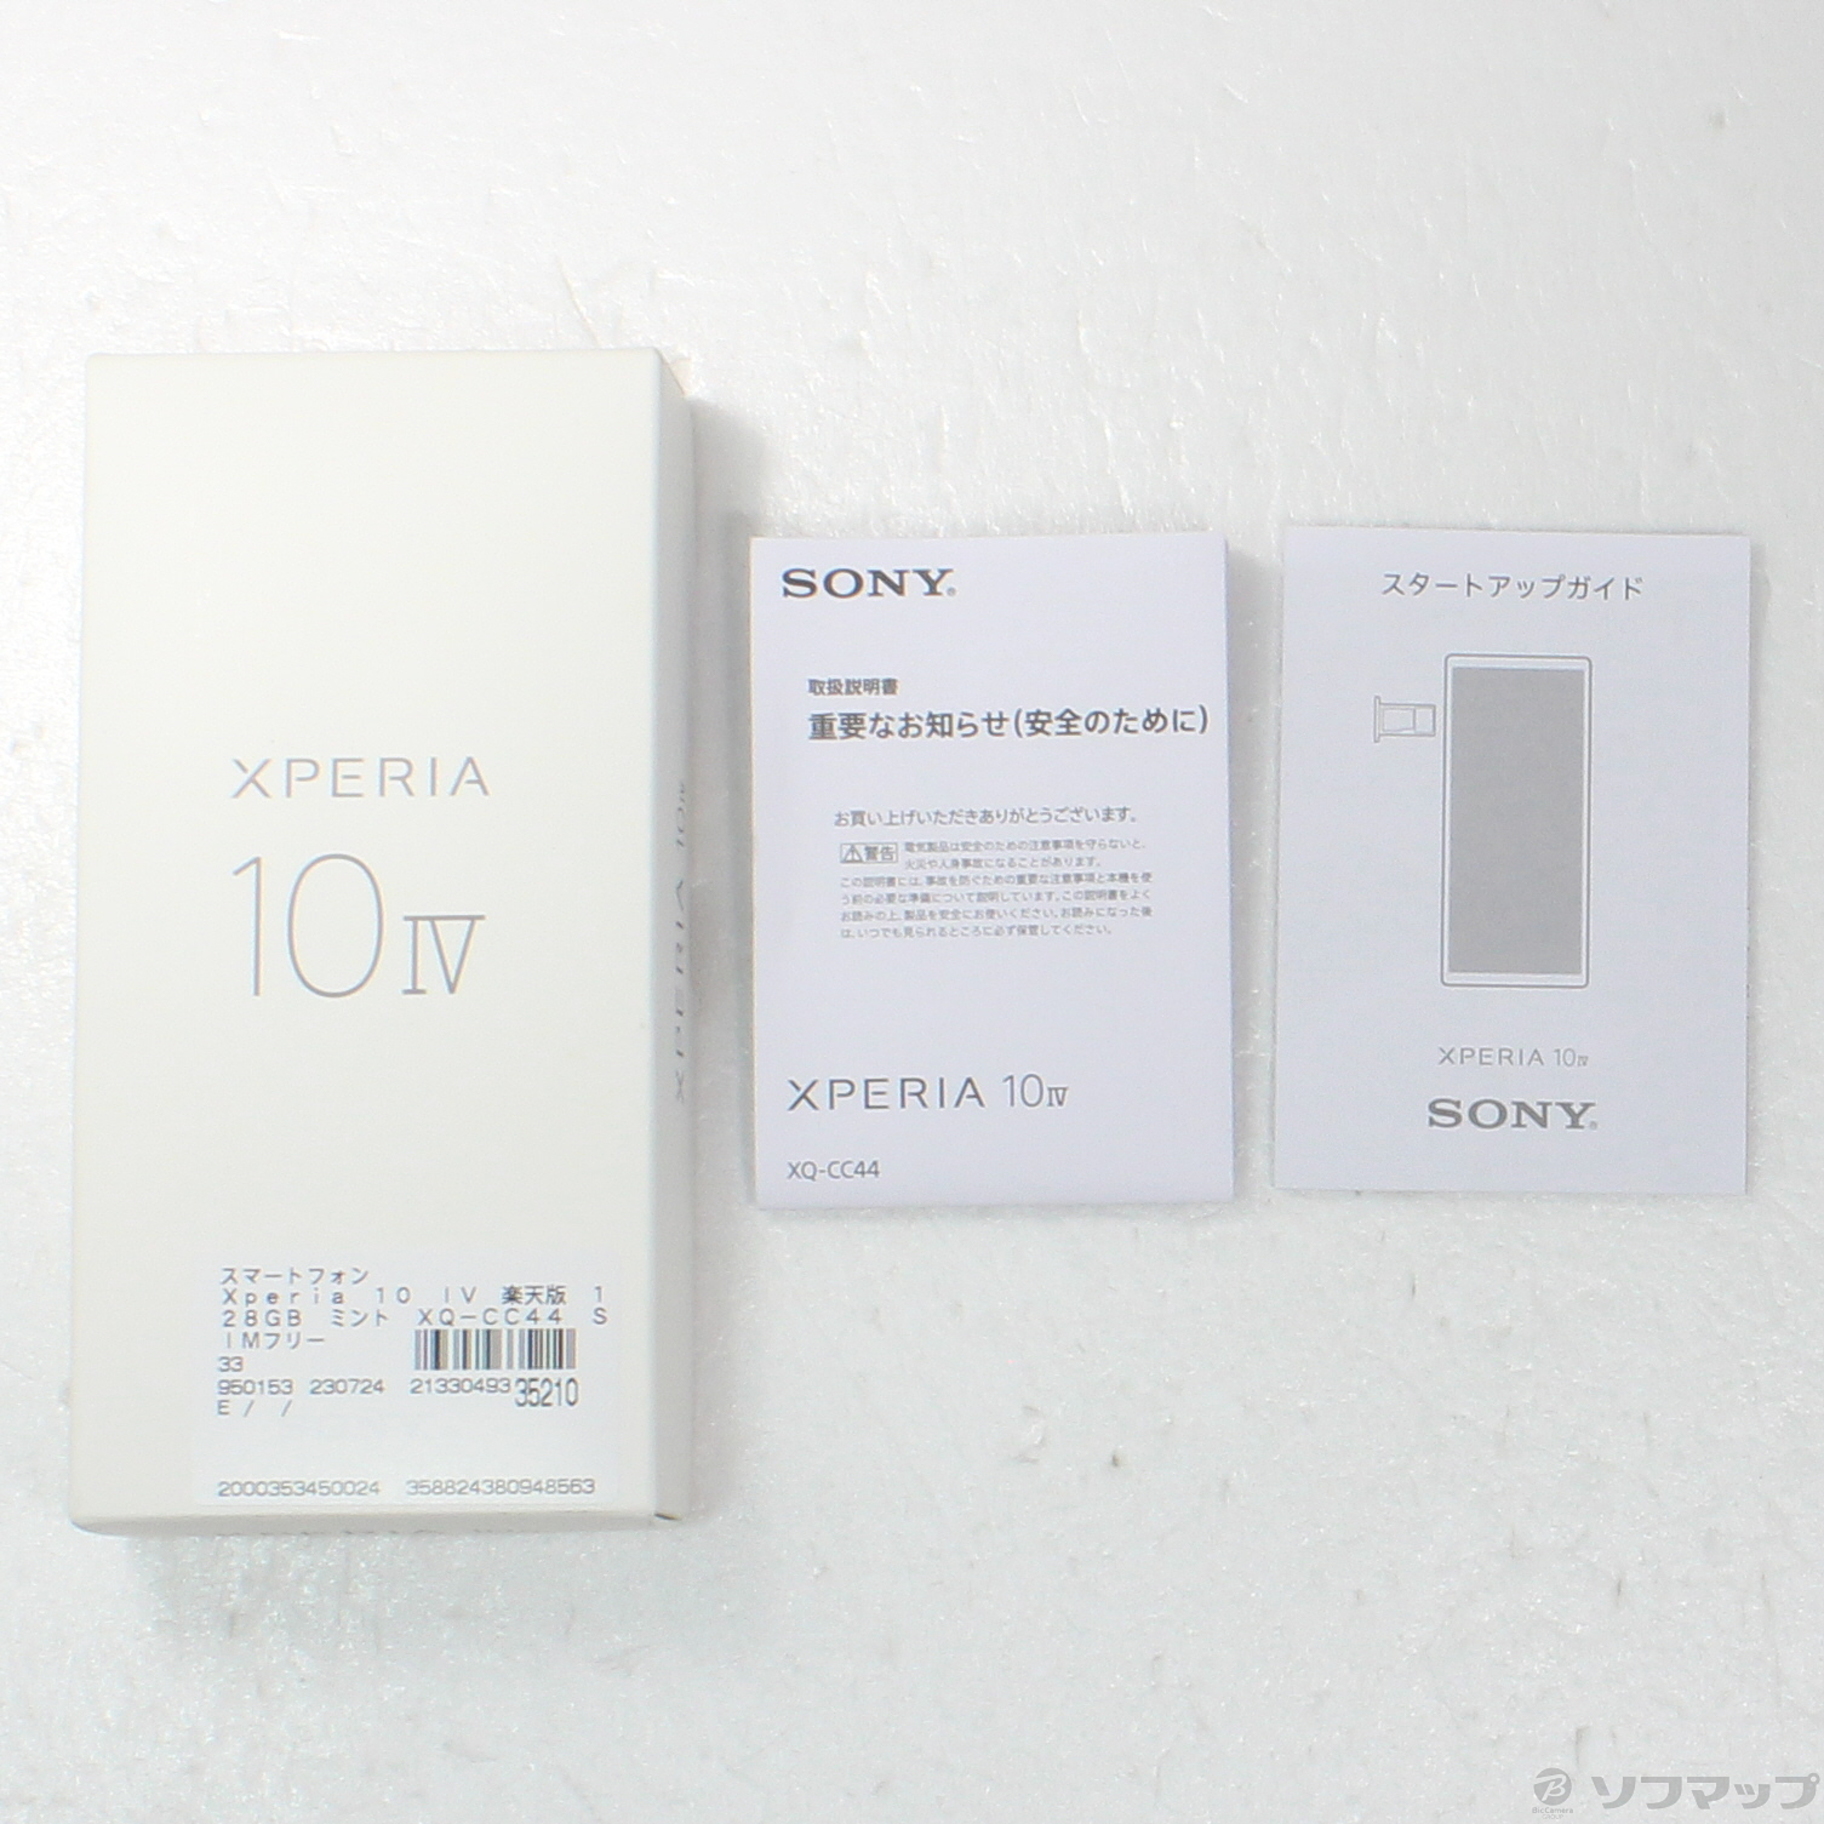 Xperia 10 IV 楽天版 128GB ミント XQ-CC44 SIMフリー